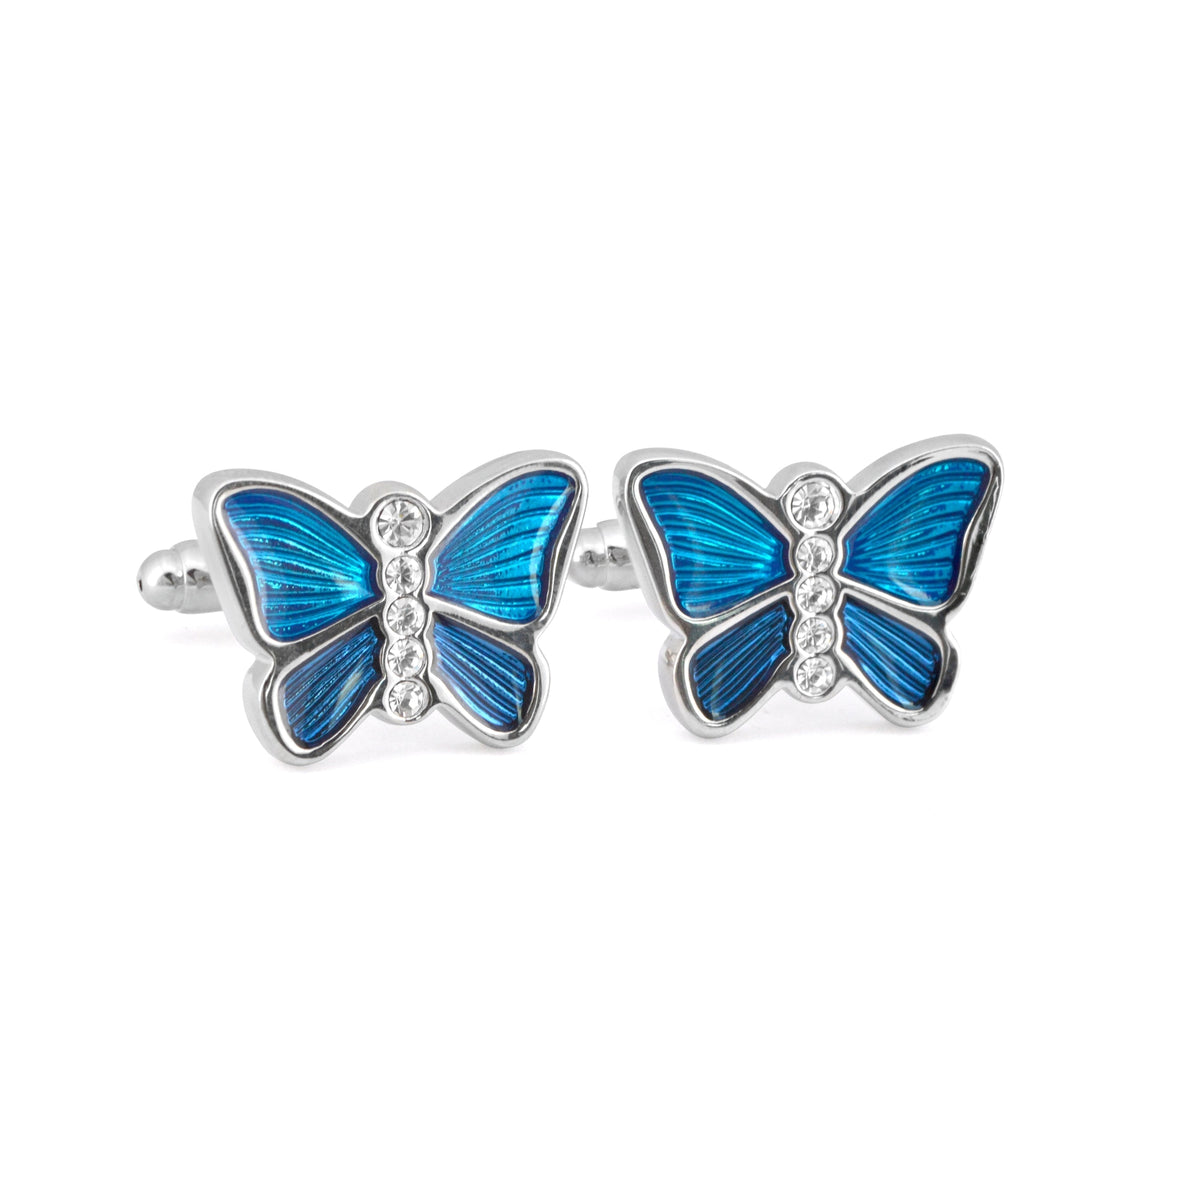 MarZthomson Butterfly Cufflinks in Blue M-Cufflinks.com.sg